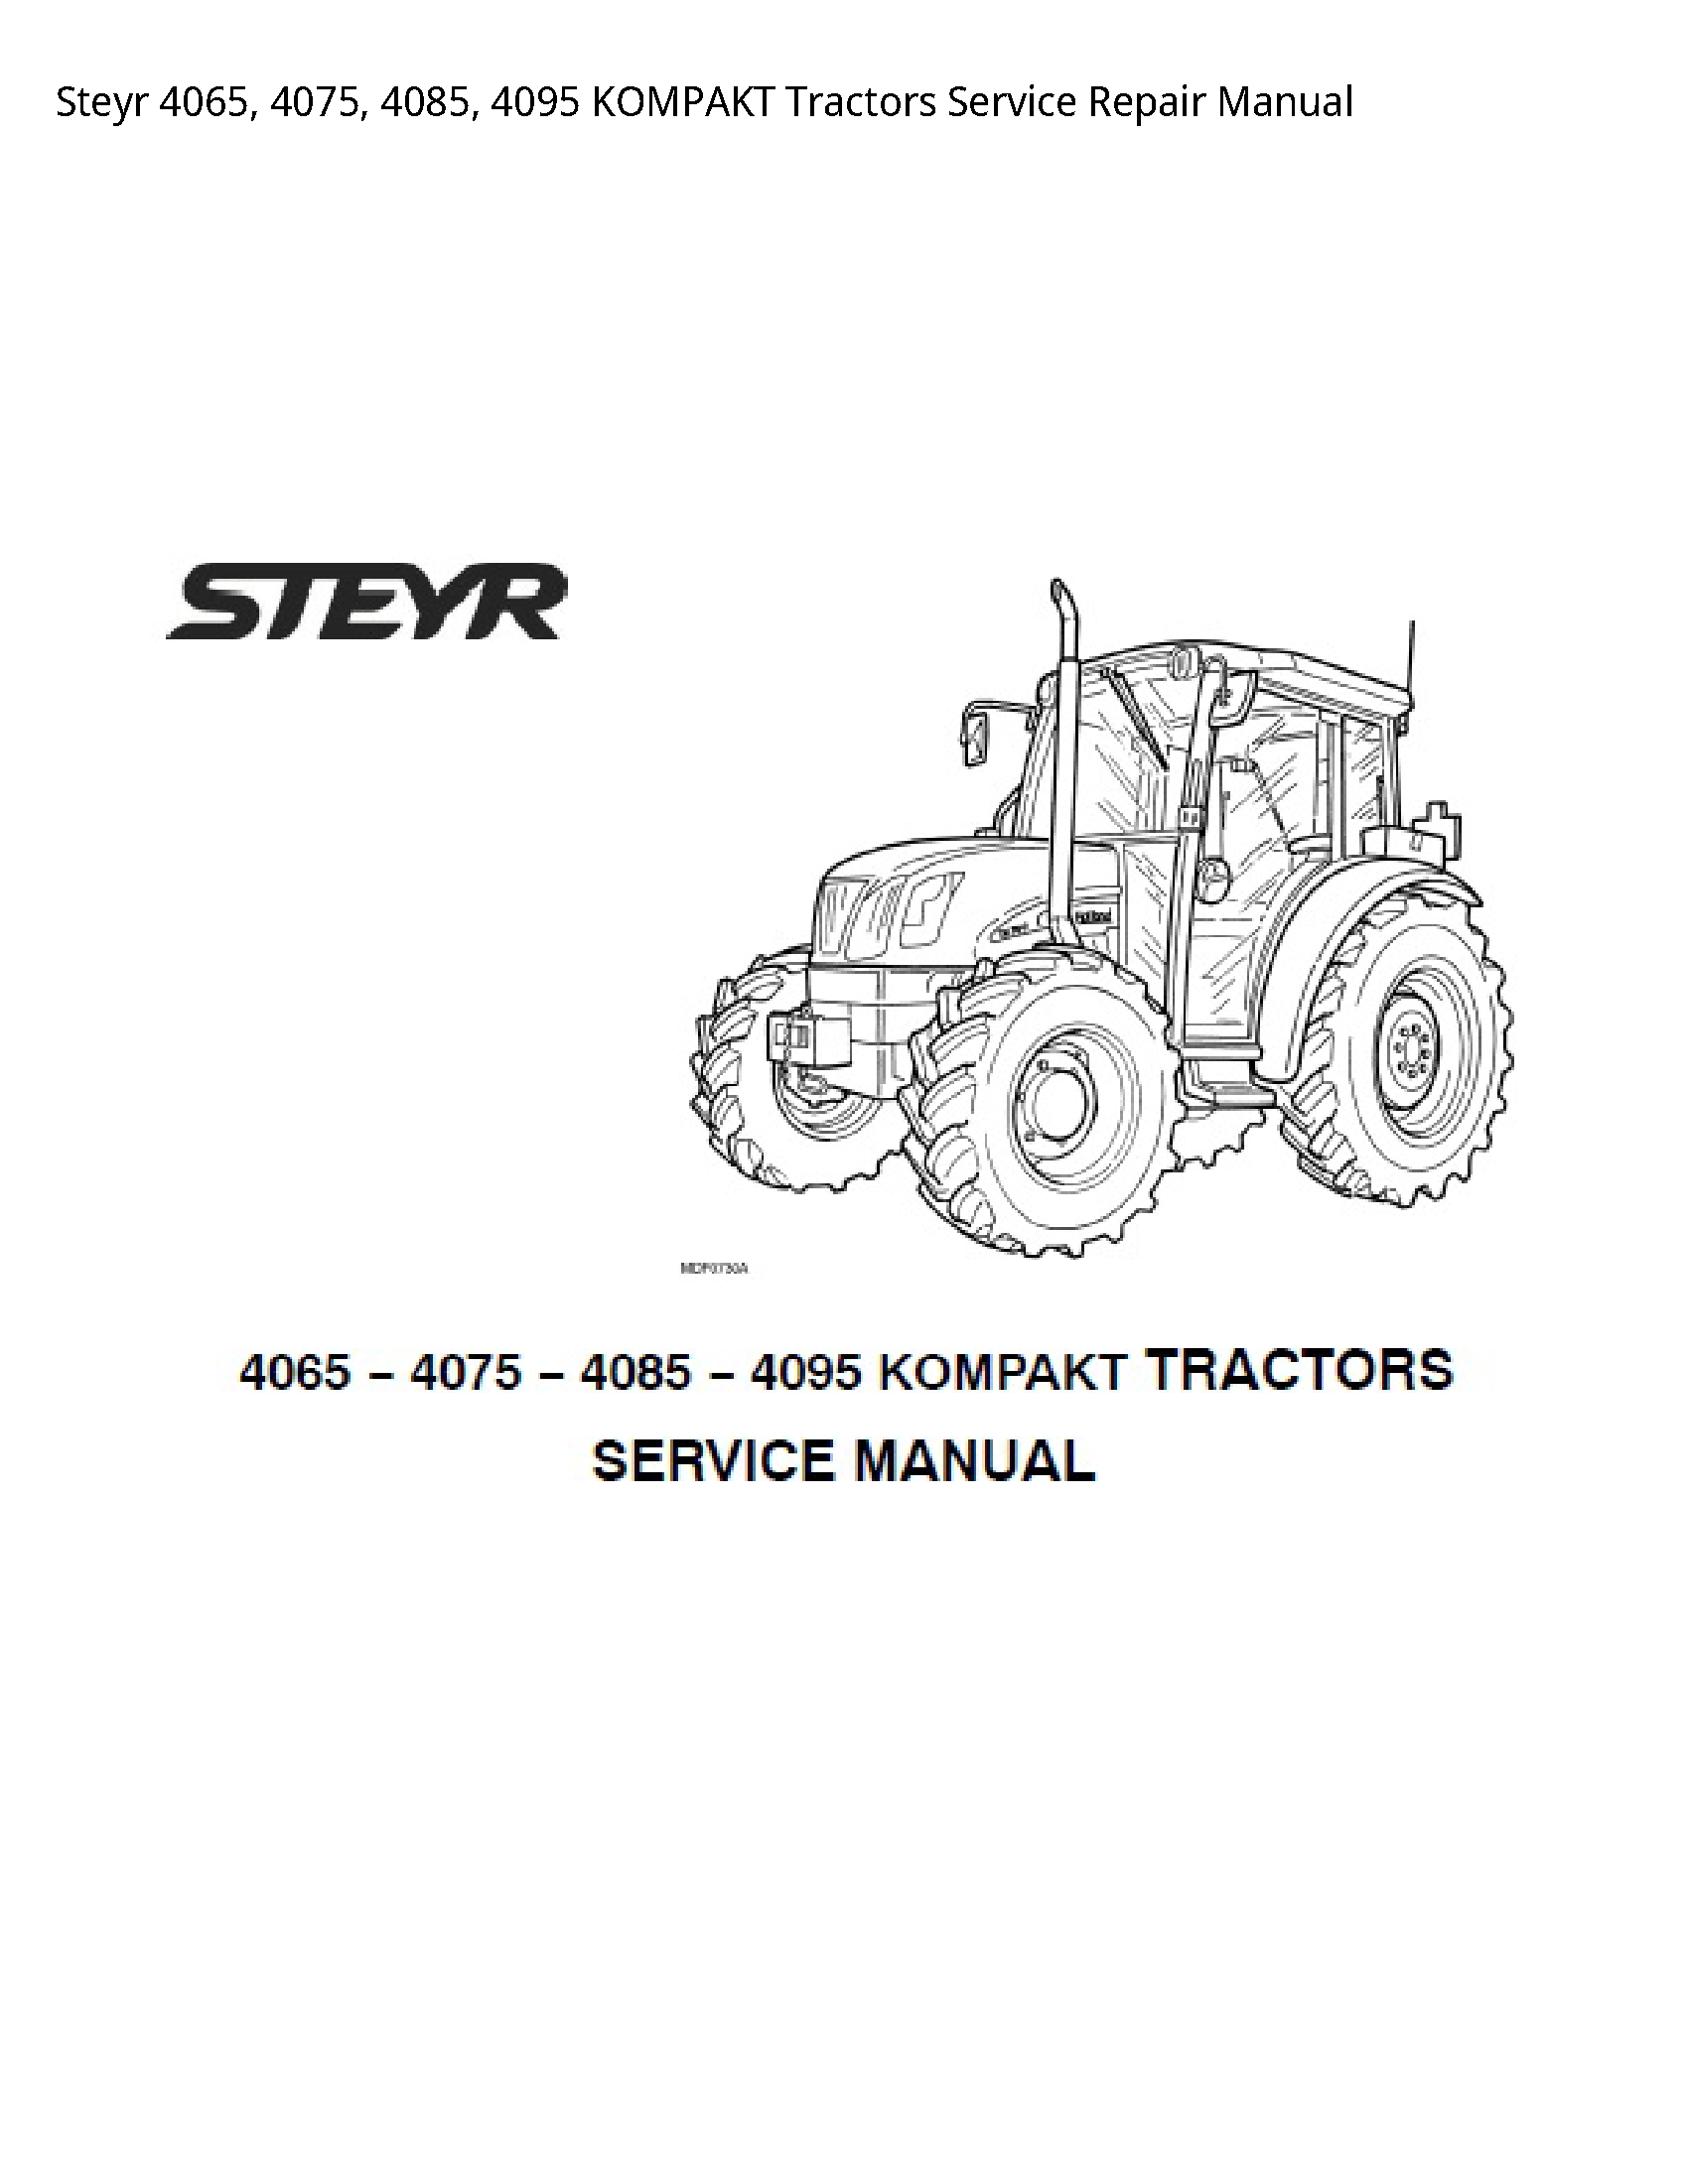 Steyr 4065 KOMPAKT Tractors manual